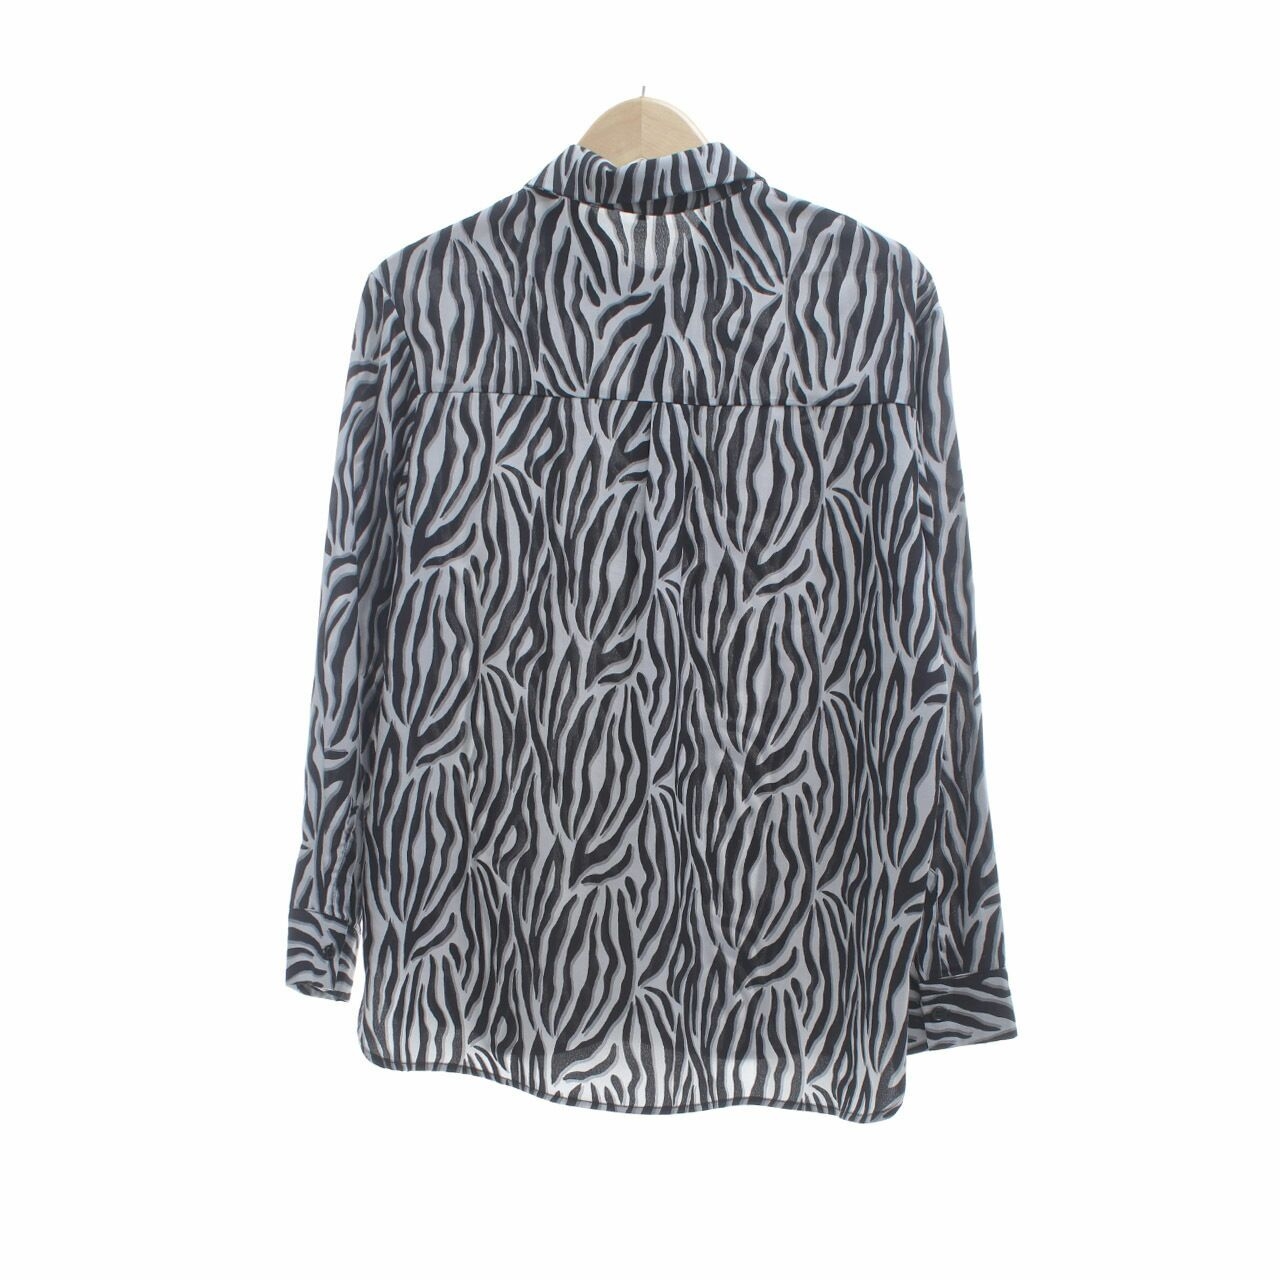 Pomelo. Light Grey & Black Zebra Print Shirt